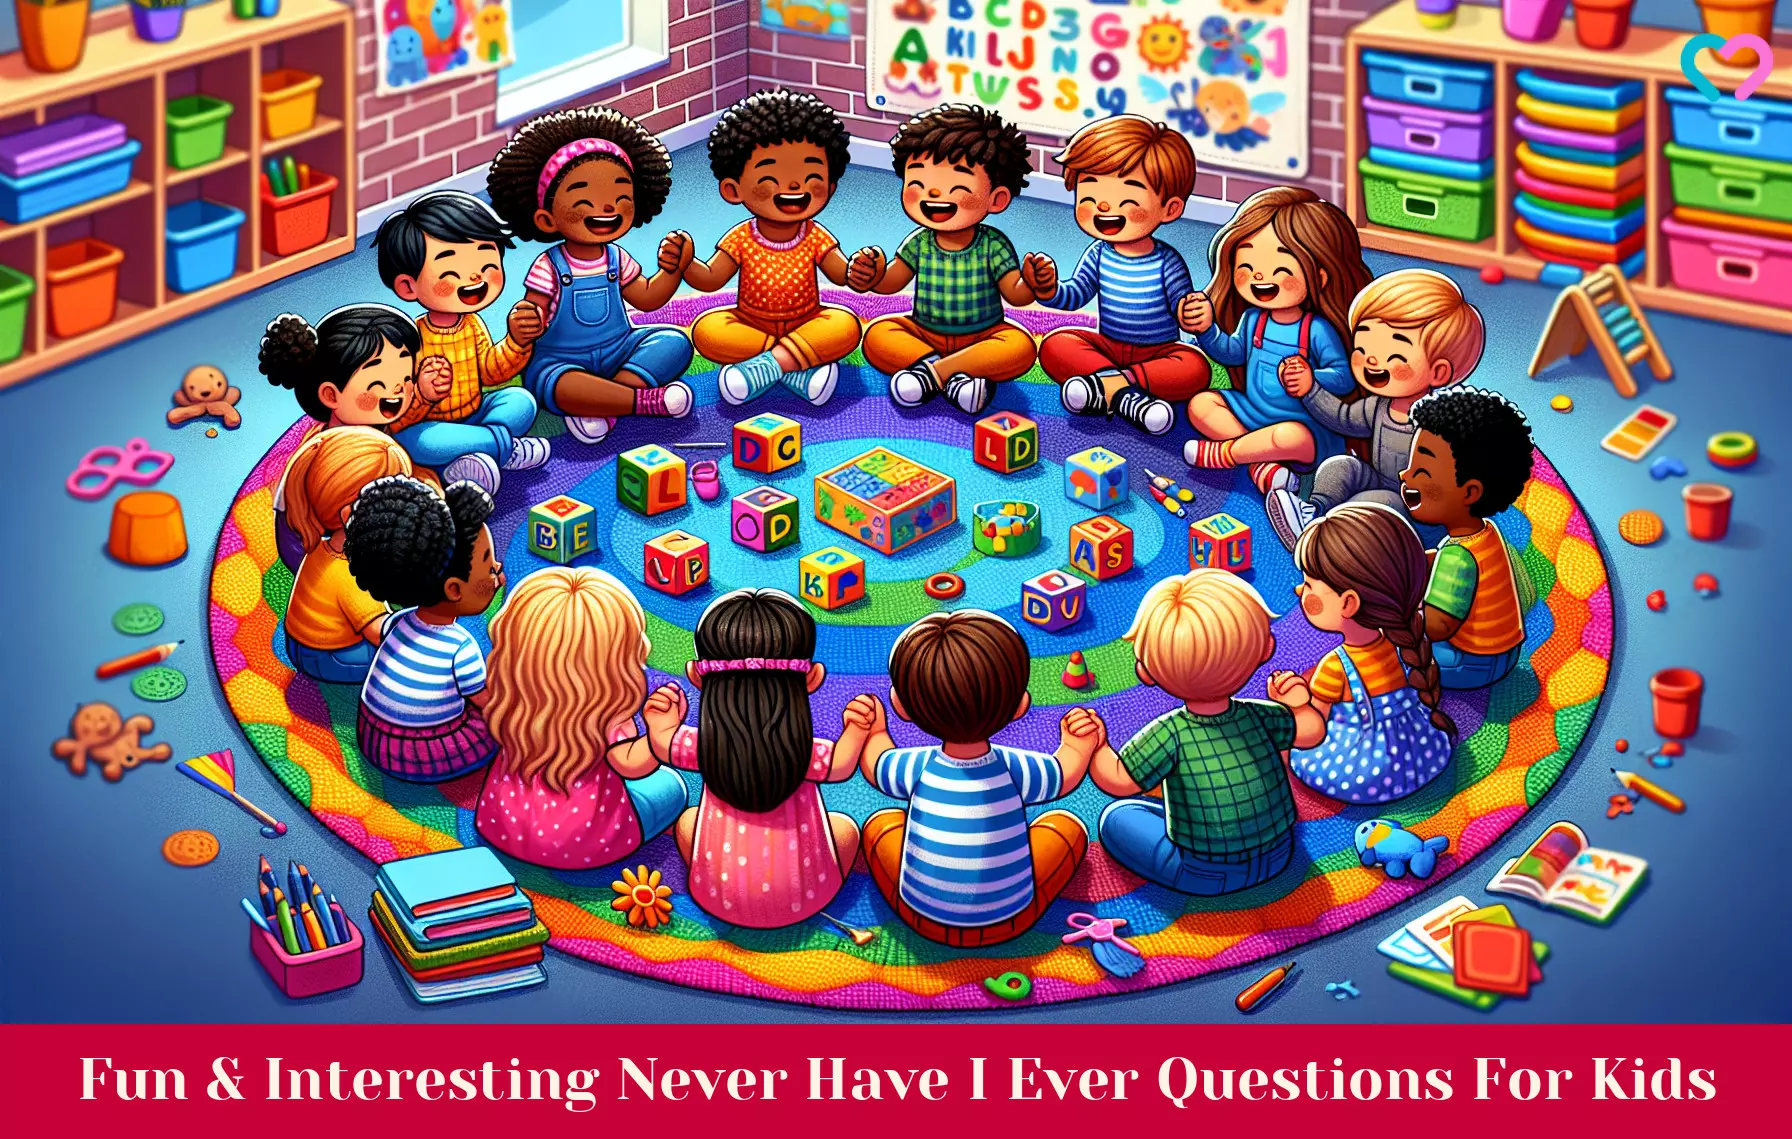 Never-Have-I-Ever Questions For Kids_illustration